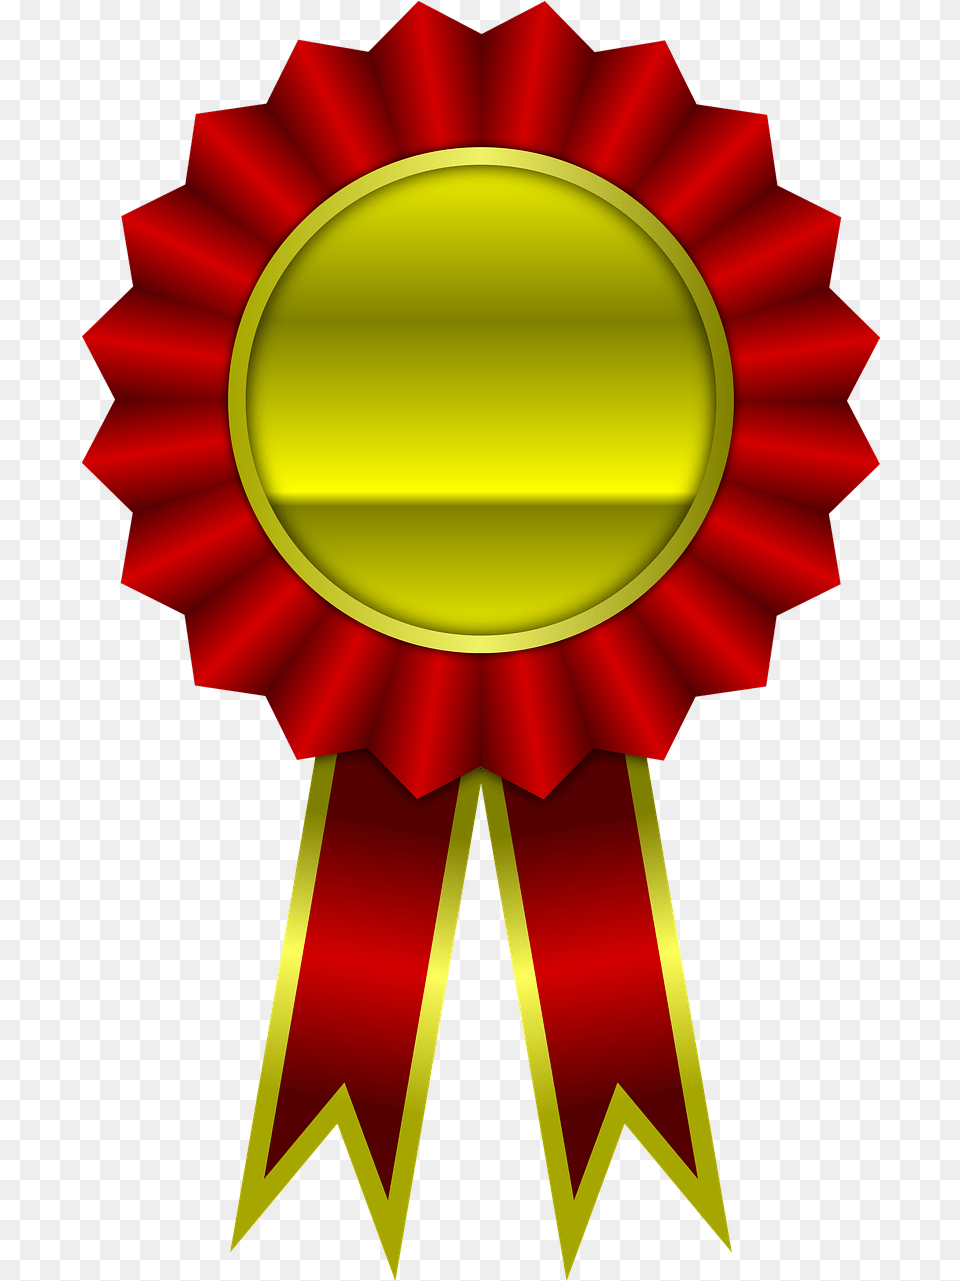 Awardredribbonwinnerachievement Free From Red Achievement Ribbon, Badge, Gold, Logo, Symbol Png Image